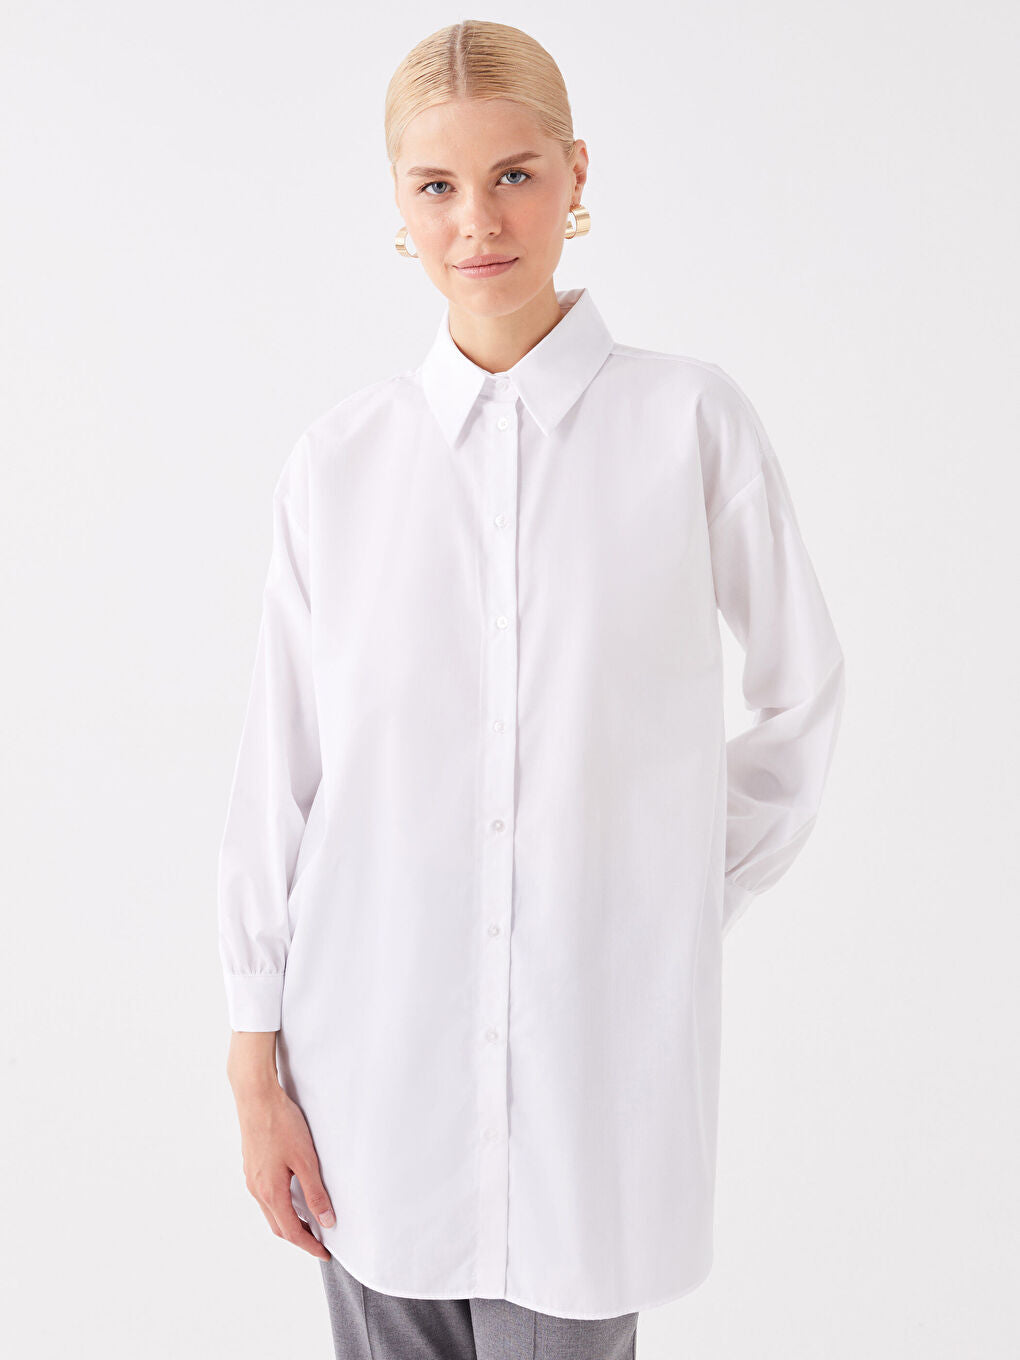 Shirt Collar Plain Long Sleeve Oversize Women Tunic